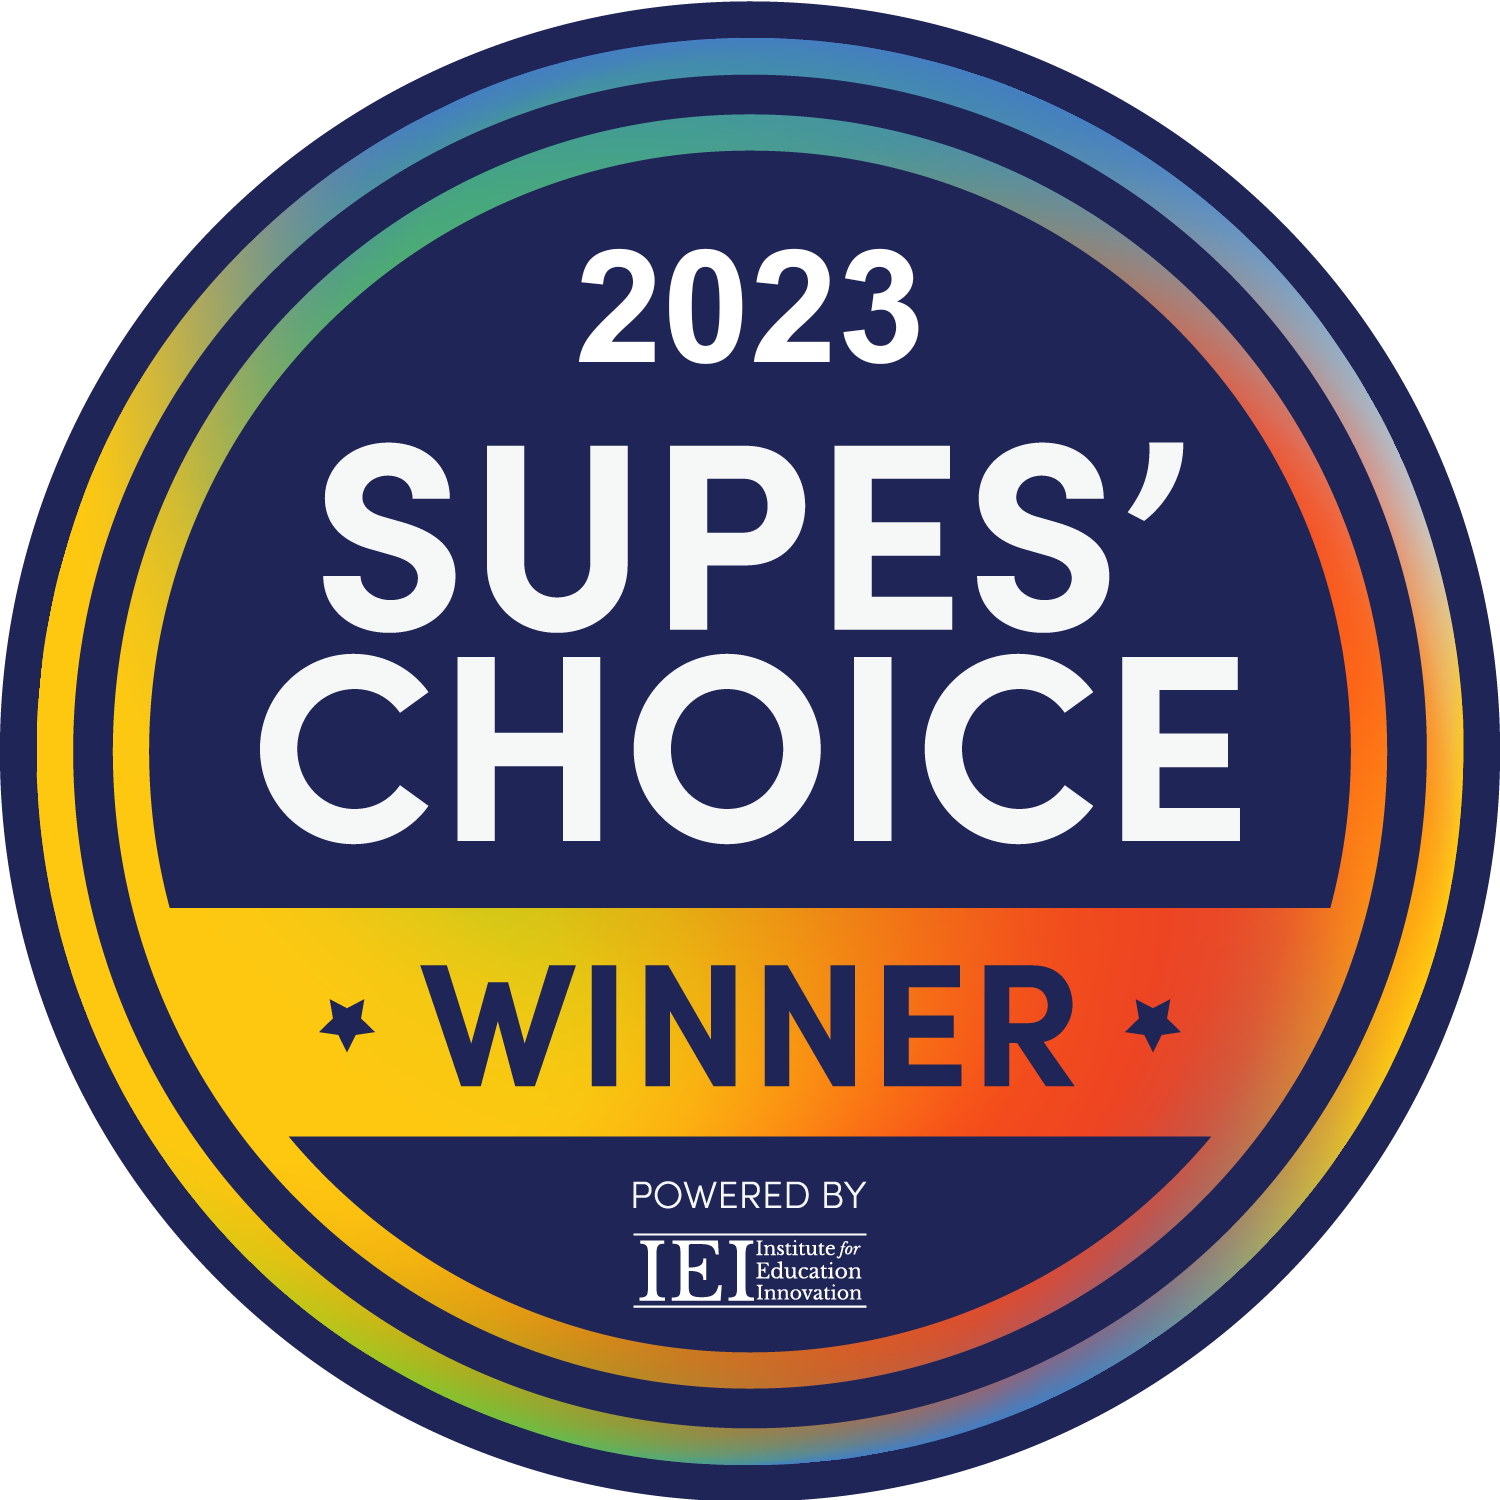 Supes Choise Winner 2023 (1)